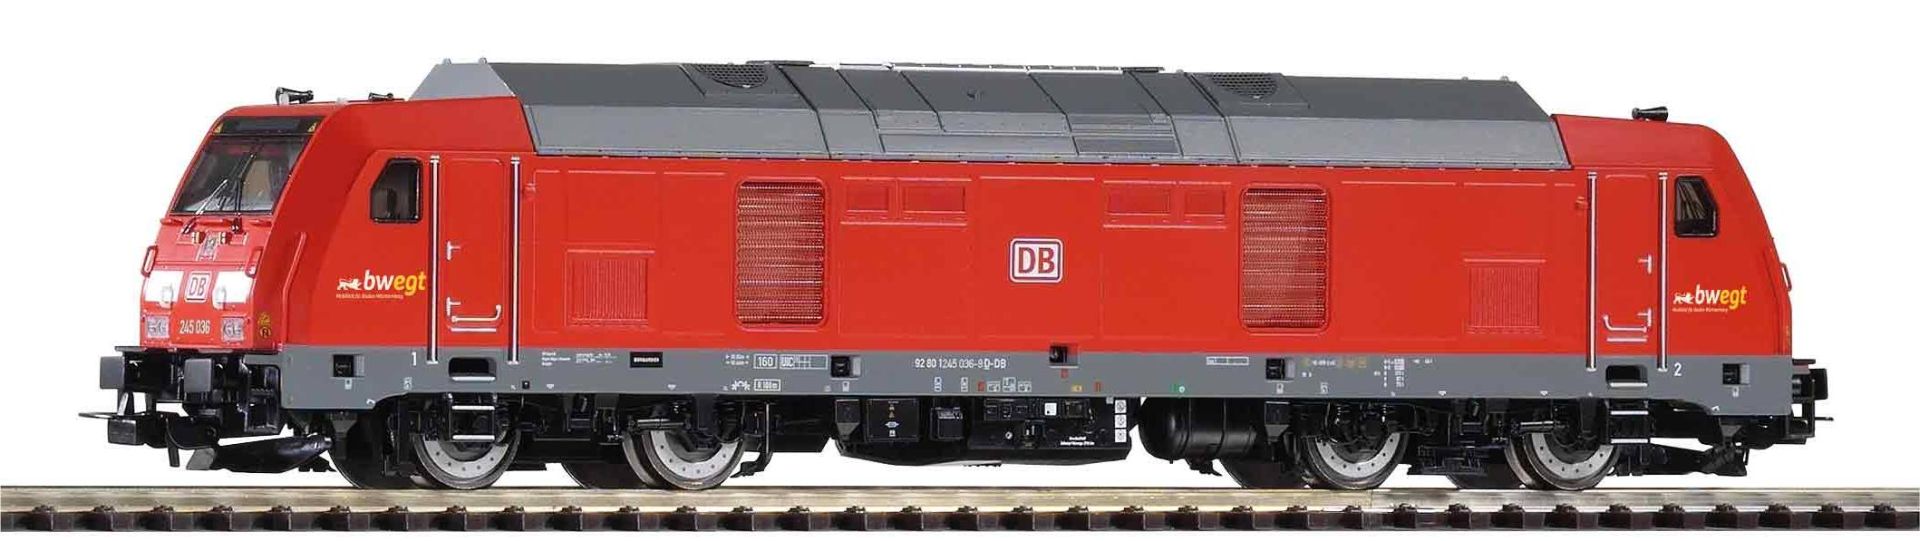 Piko 52527 - Diesellok BR 245 bwegt, DBAG, Ep.VI, AC-Sound